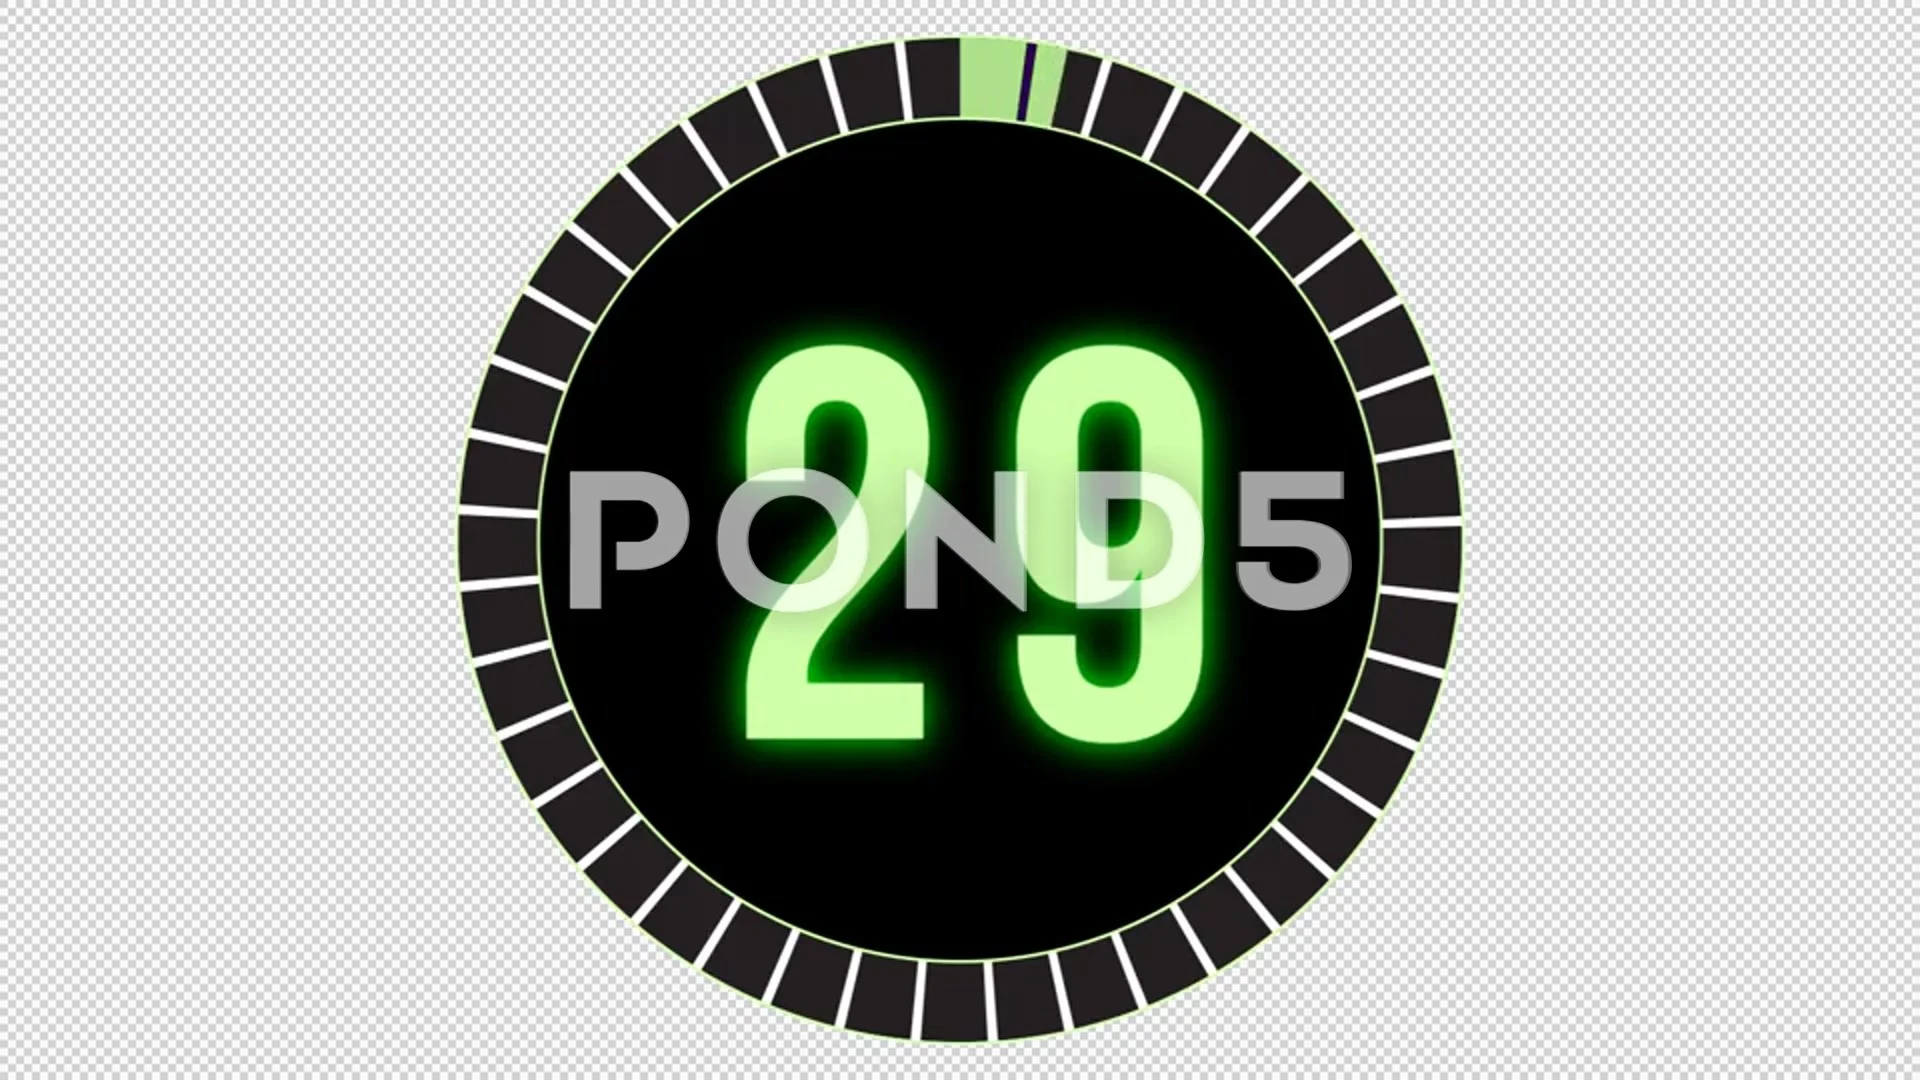 https://images.pond5.com/30-second-alpha-channel-countdown-138721378_prevstill.jpeg